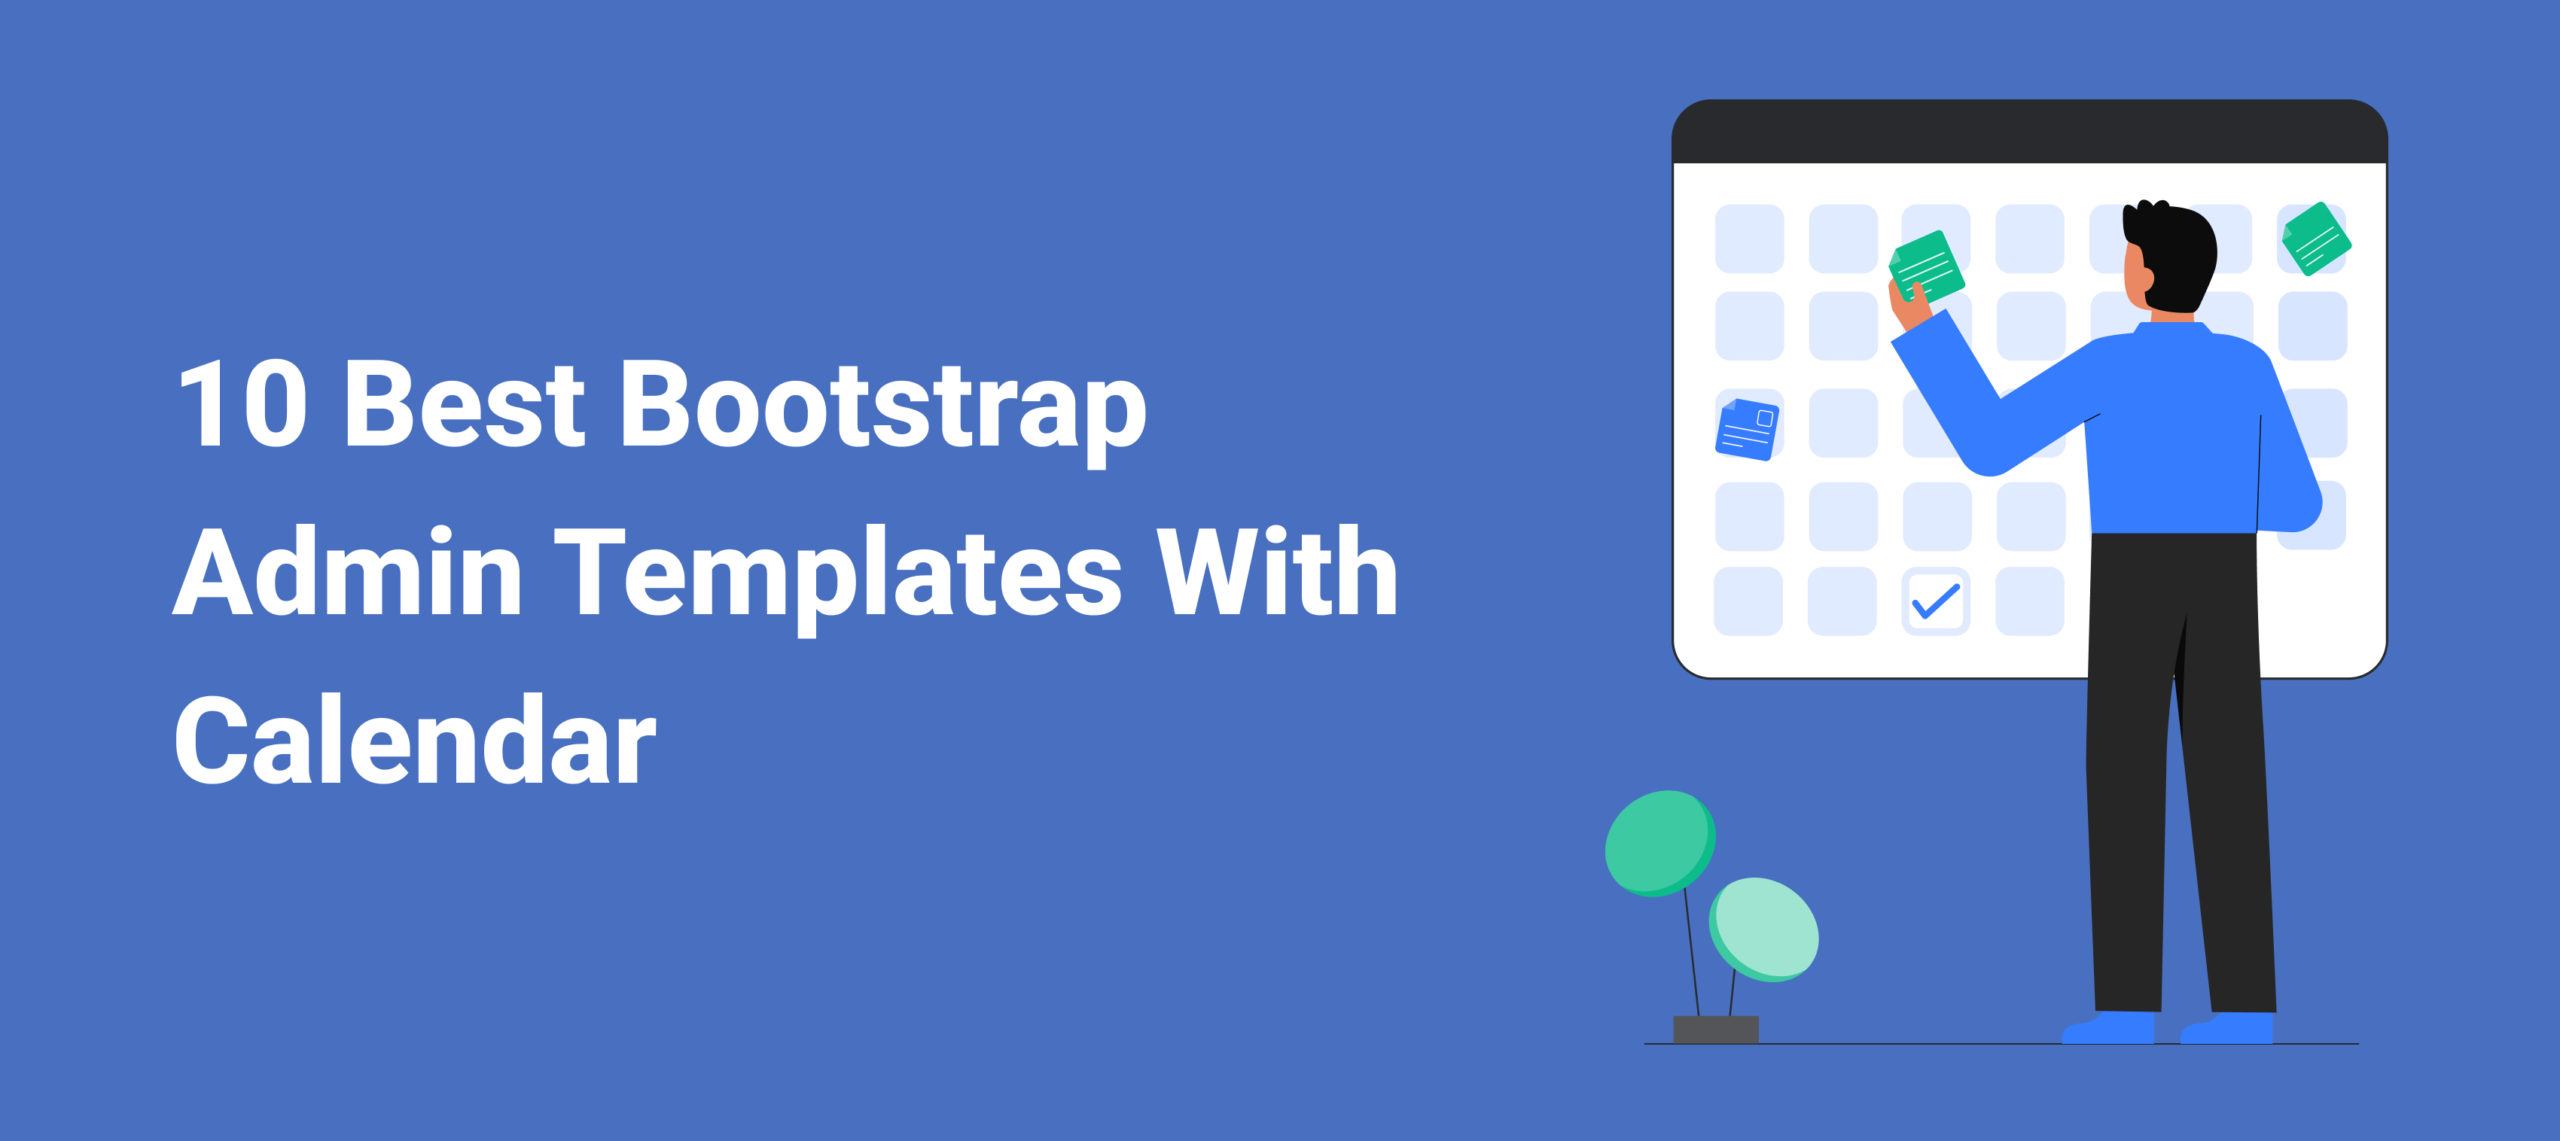  10 Best Bootstrap Admin Templates With Calendar